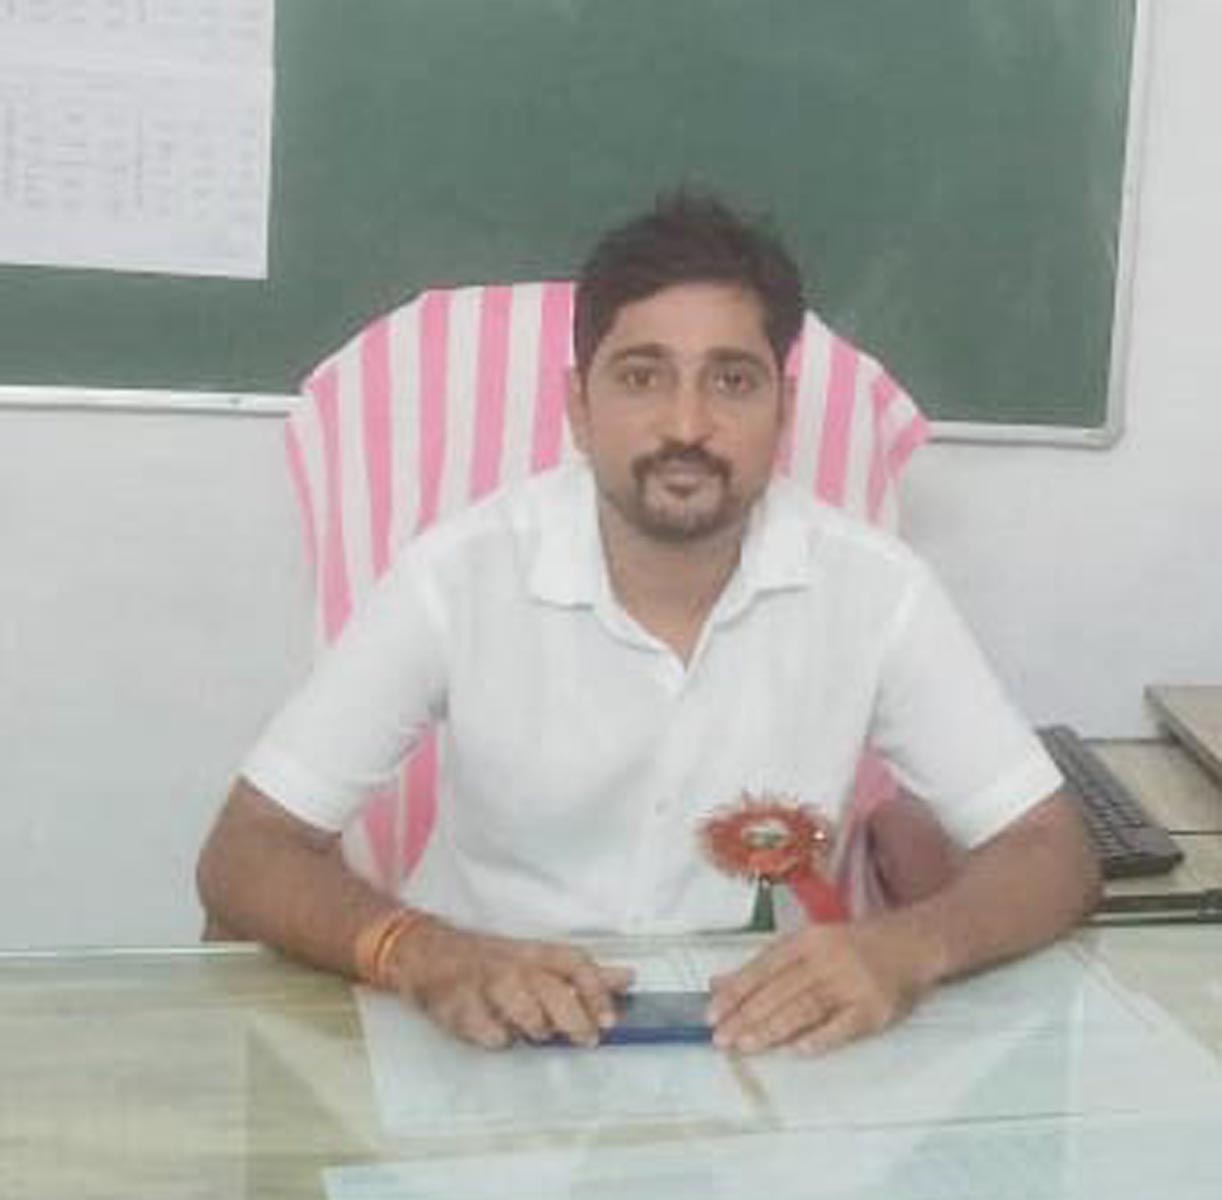 K. P. College Bandhapali Sarangarh Dist Raigarh